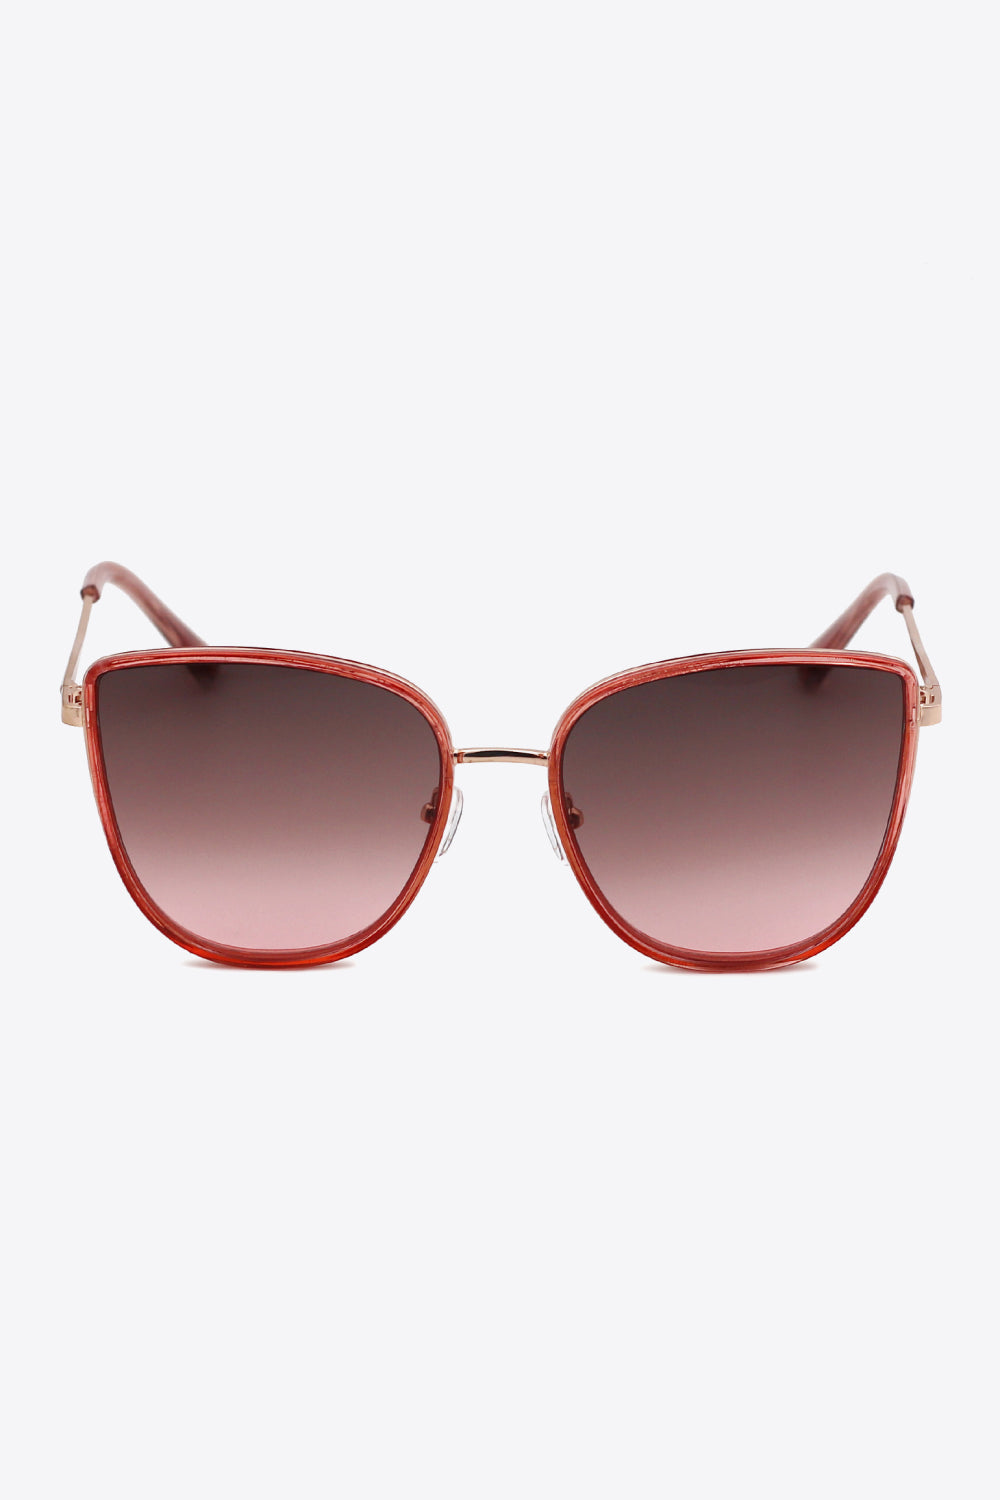 - Full Rim Metal-Plastic Hybrid Frame Sunglasses - 2 colors - Sunglasses at TFC&H Co.